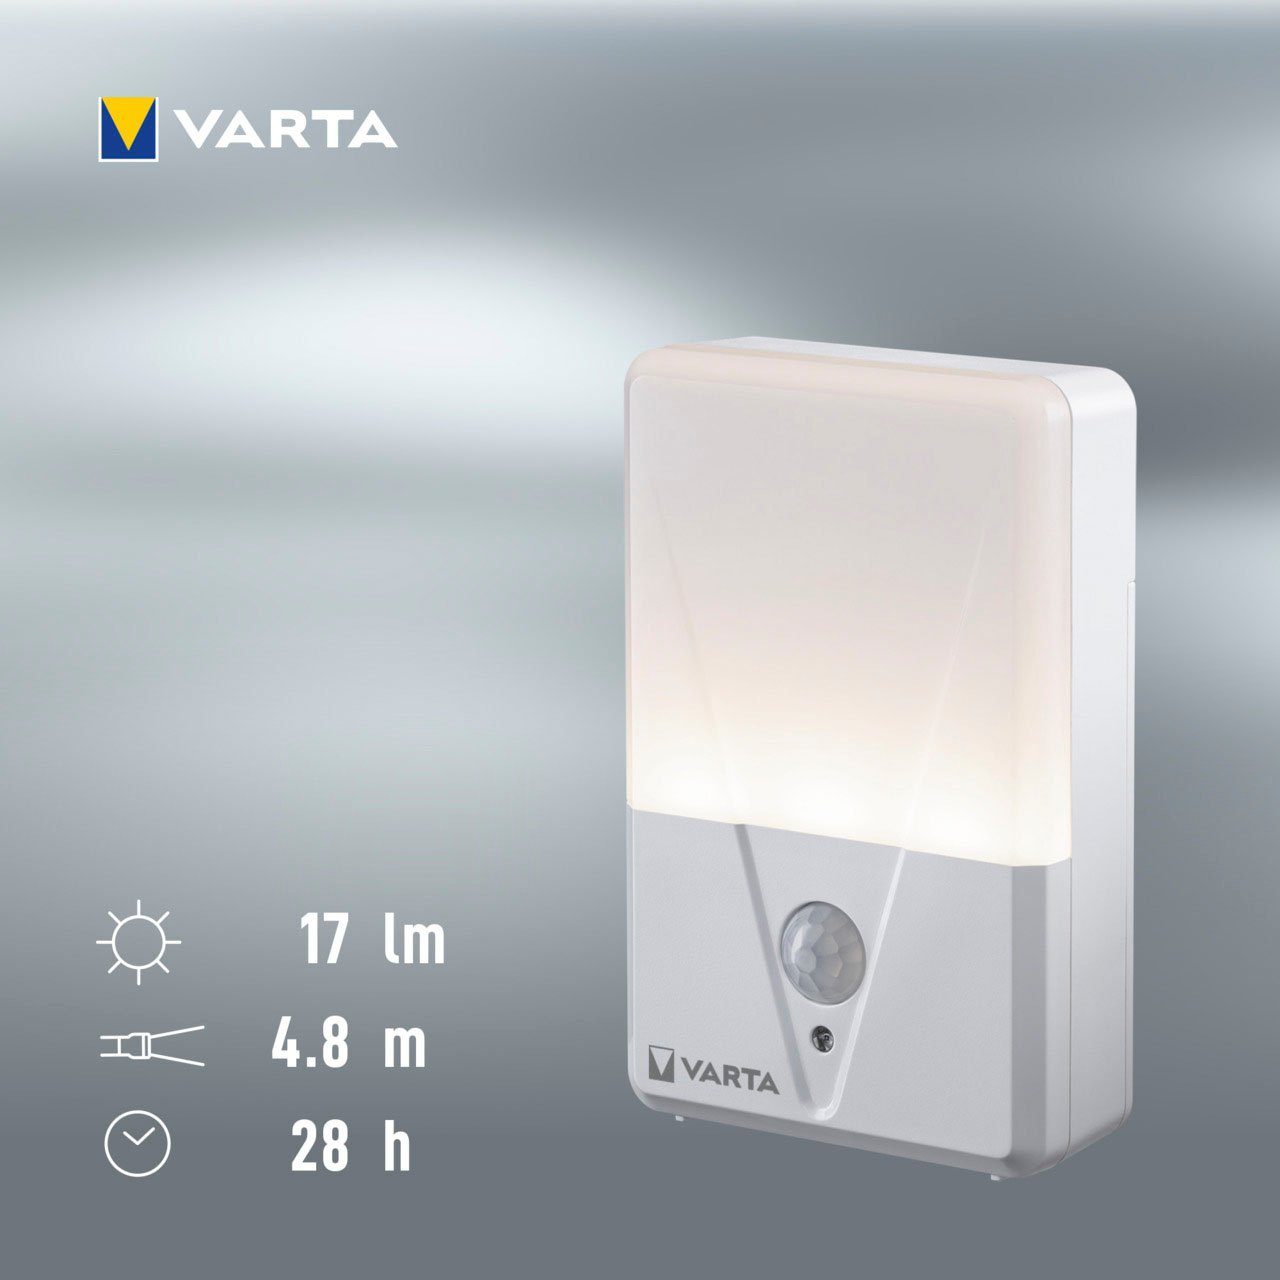 VARTA LED batteriebetrieben fest Warmweiß ist integriert, Motion Nachtlicht 3xAAA, Nachtlicht VARTA inkl. Sensor